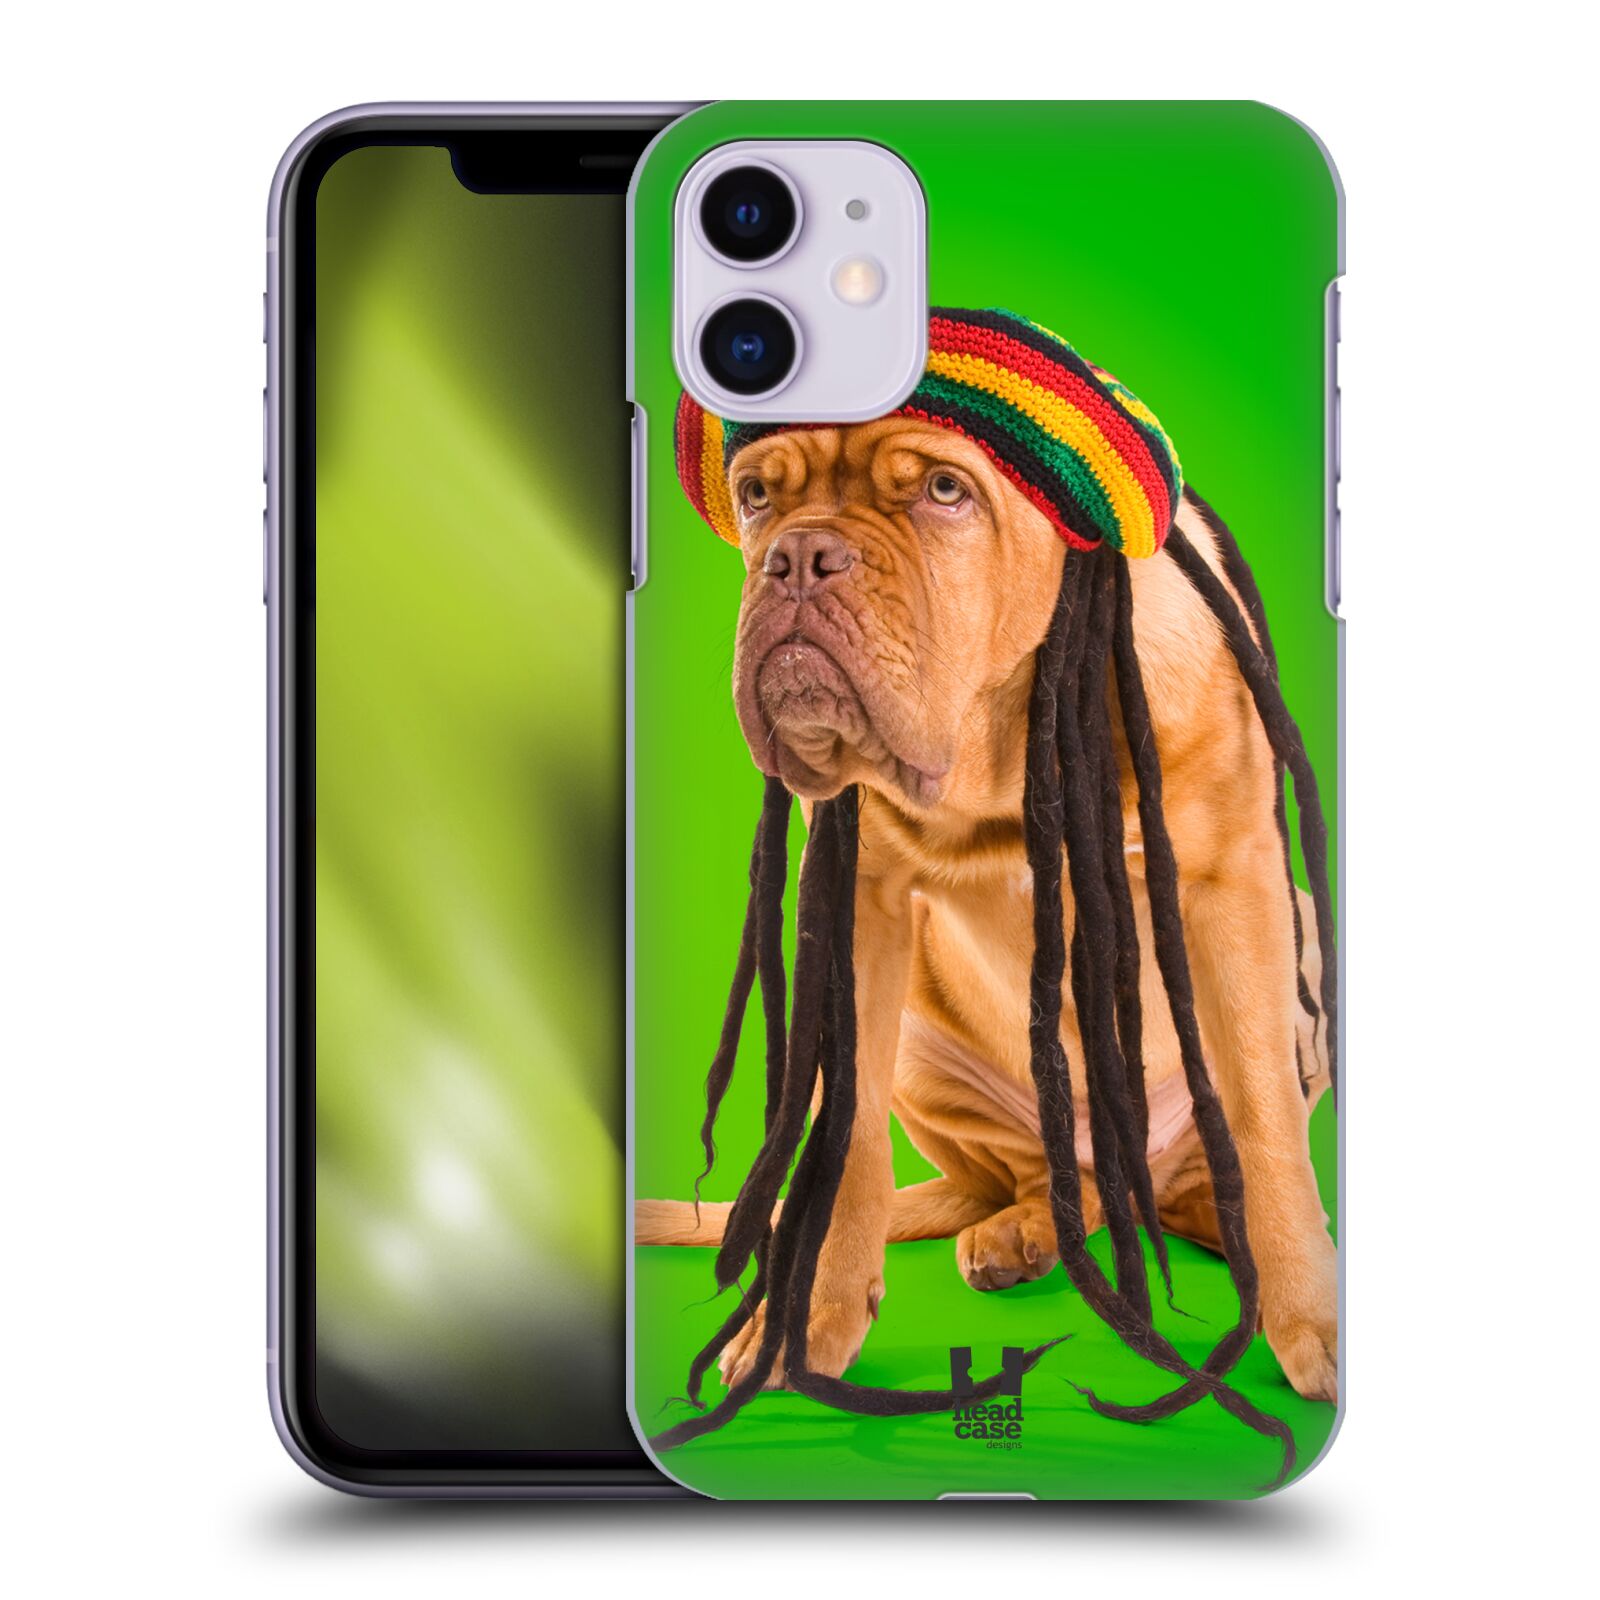 Pouzdro na mobil Apple Iphone 11 - HEAD CASE - vzor Legrační zvířátka pejsek dredy Rastafarián